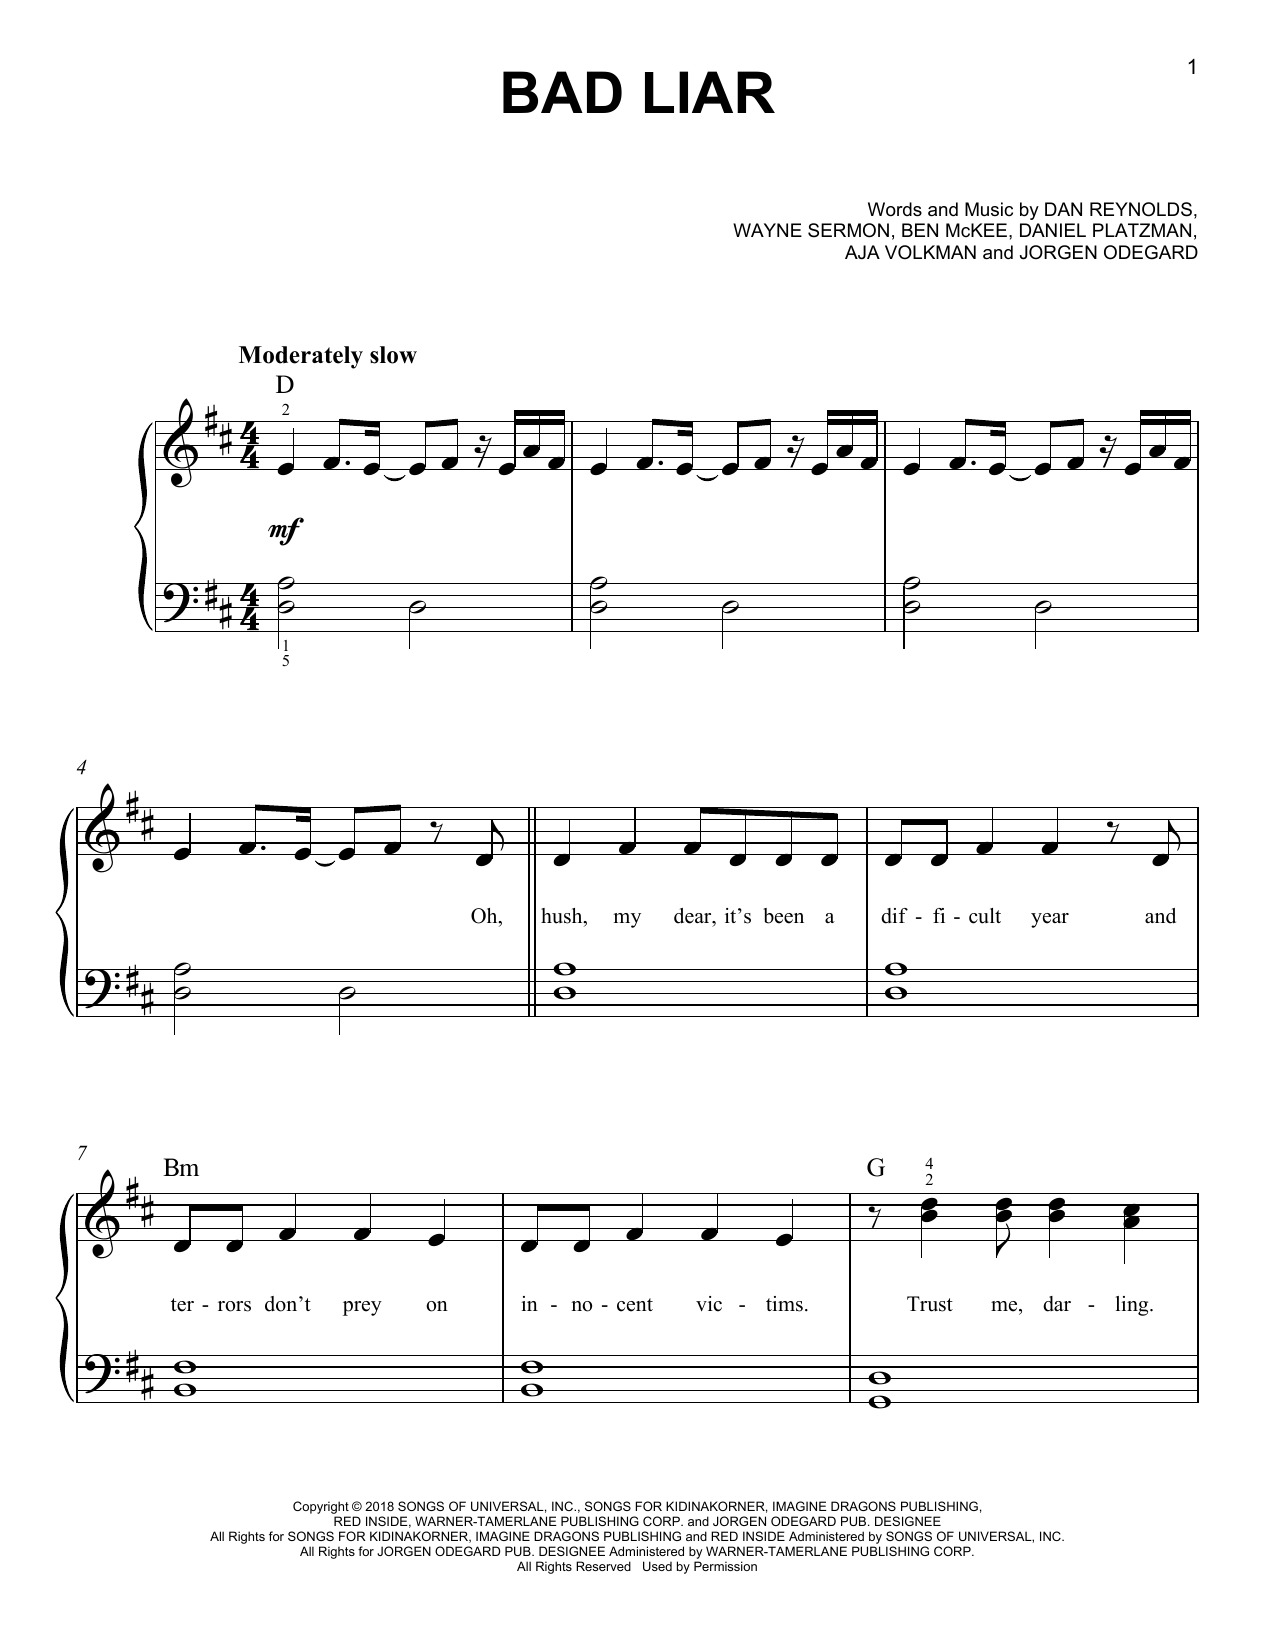 Imagine Dragons Bad Liar sheet music notes printable PDF score